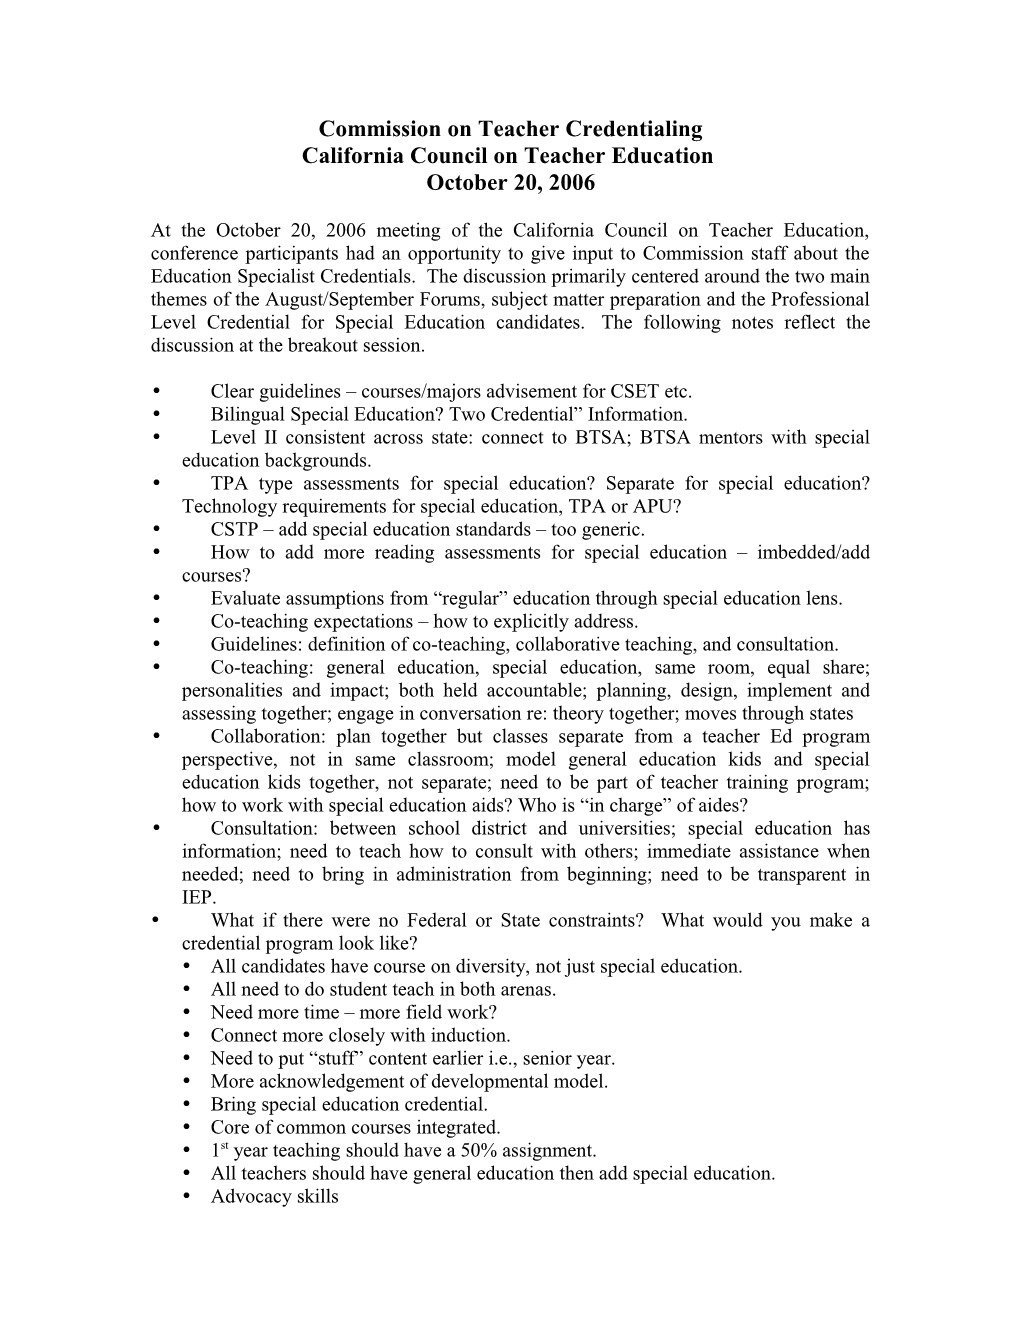 October 20, 2006 CCTE Field Input (Credentialing Process)